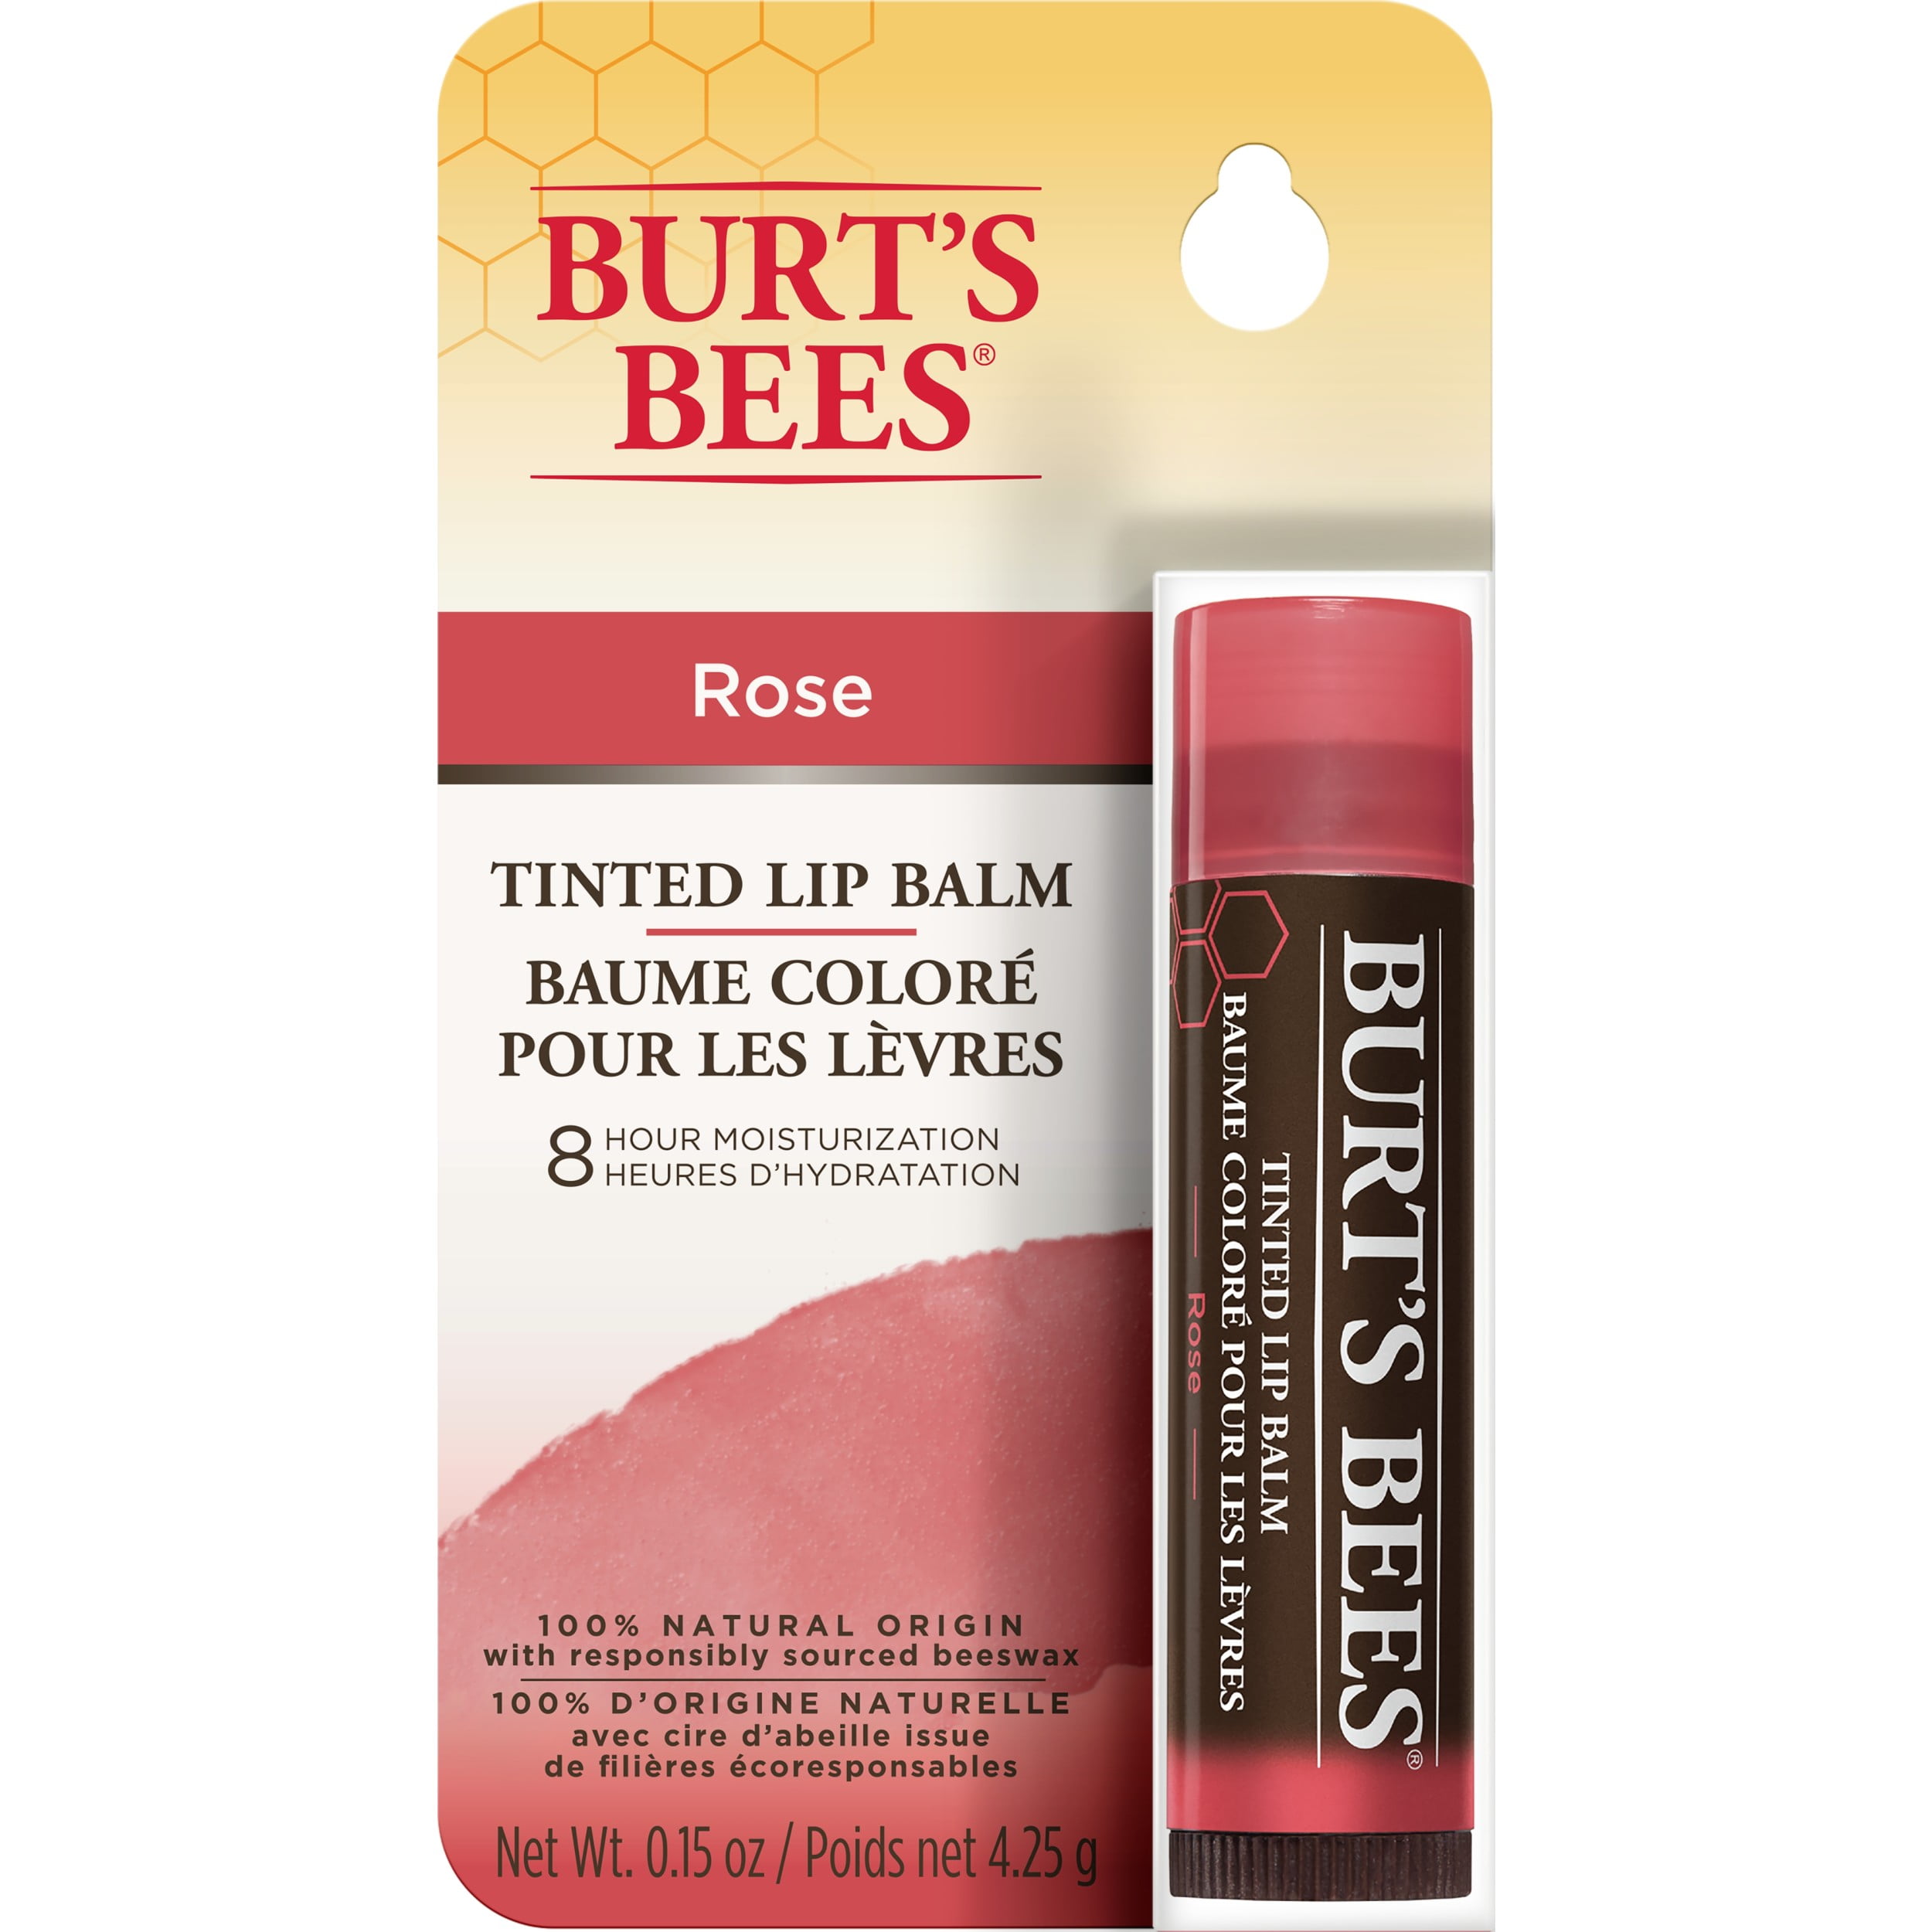 Bees 100% Moisturizing Tinted Lip Balm with Shea Butter, Rose, 1 Tube - Walmart.com